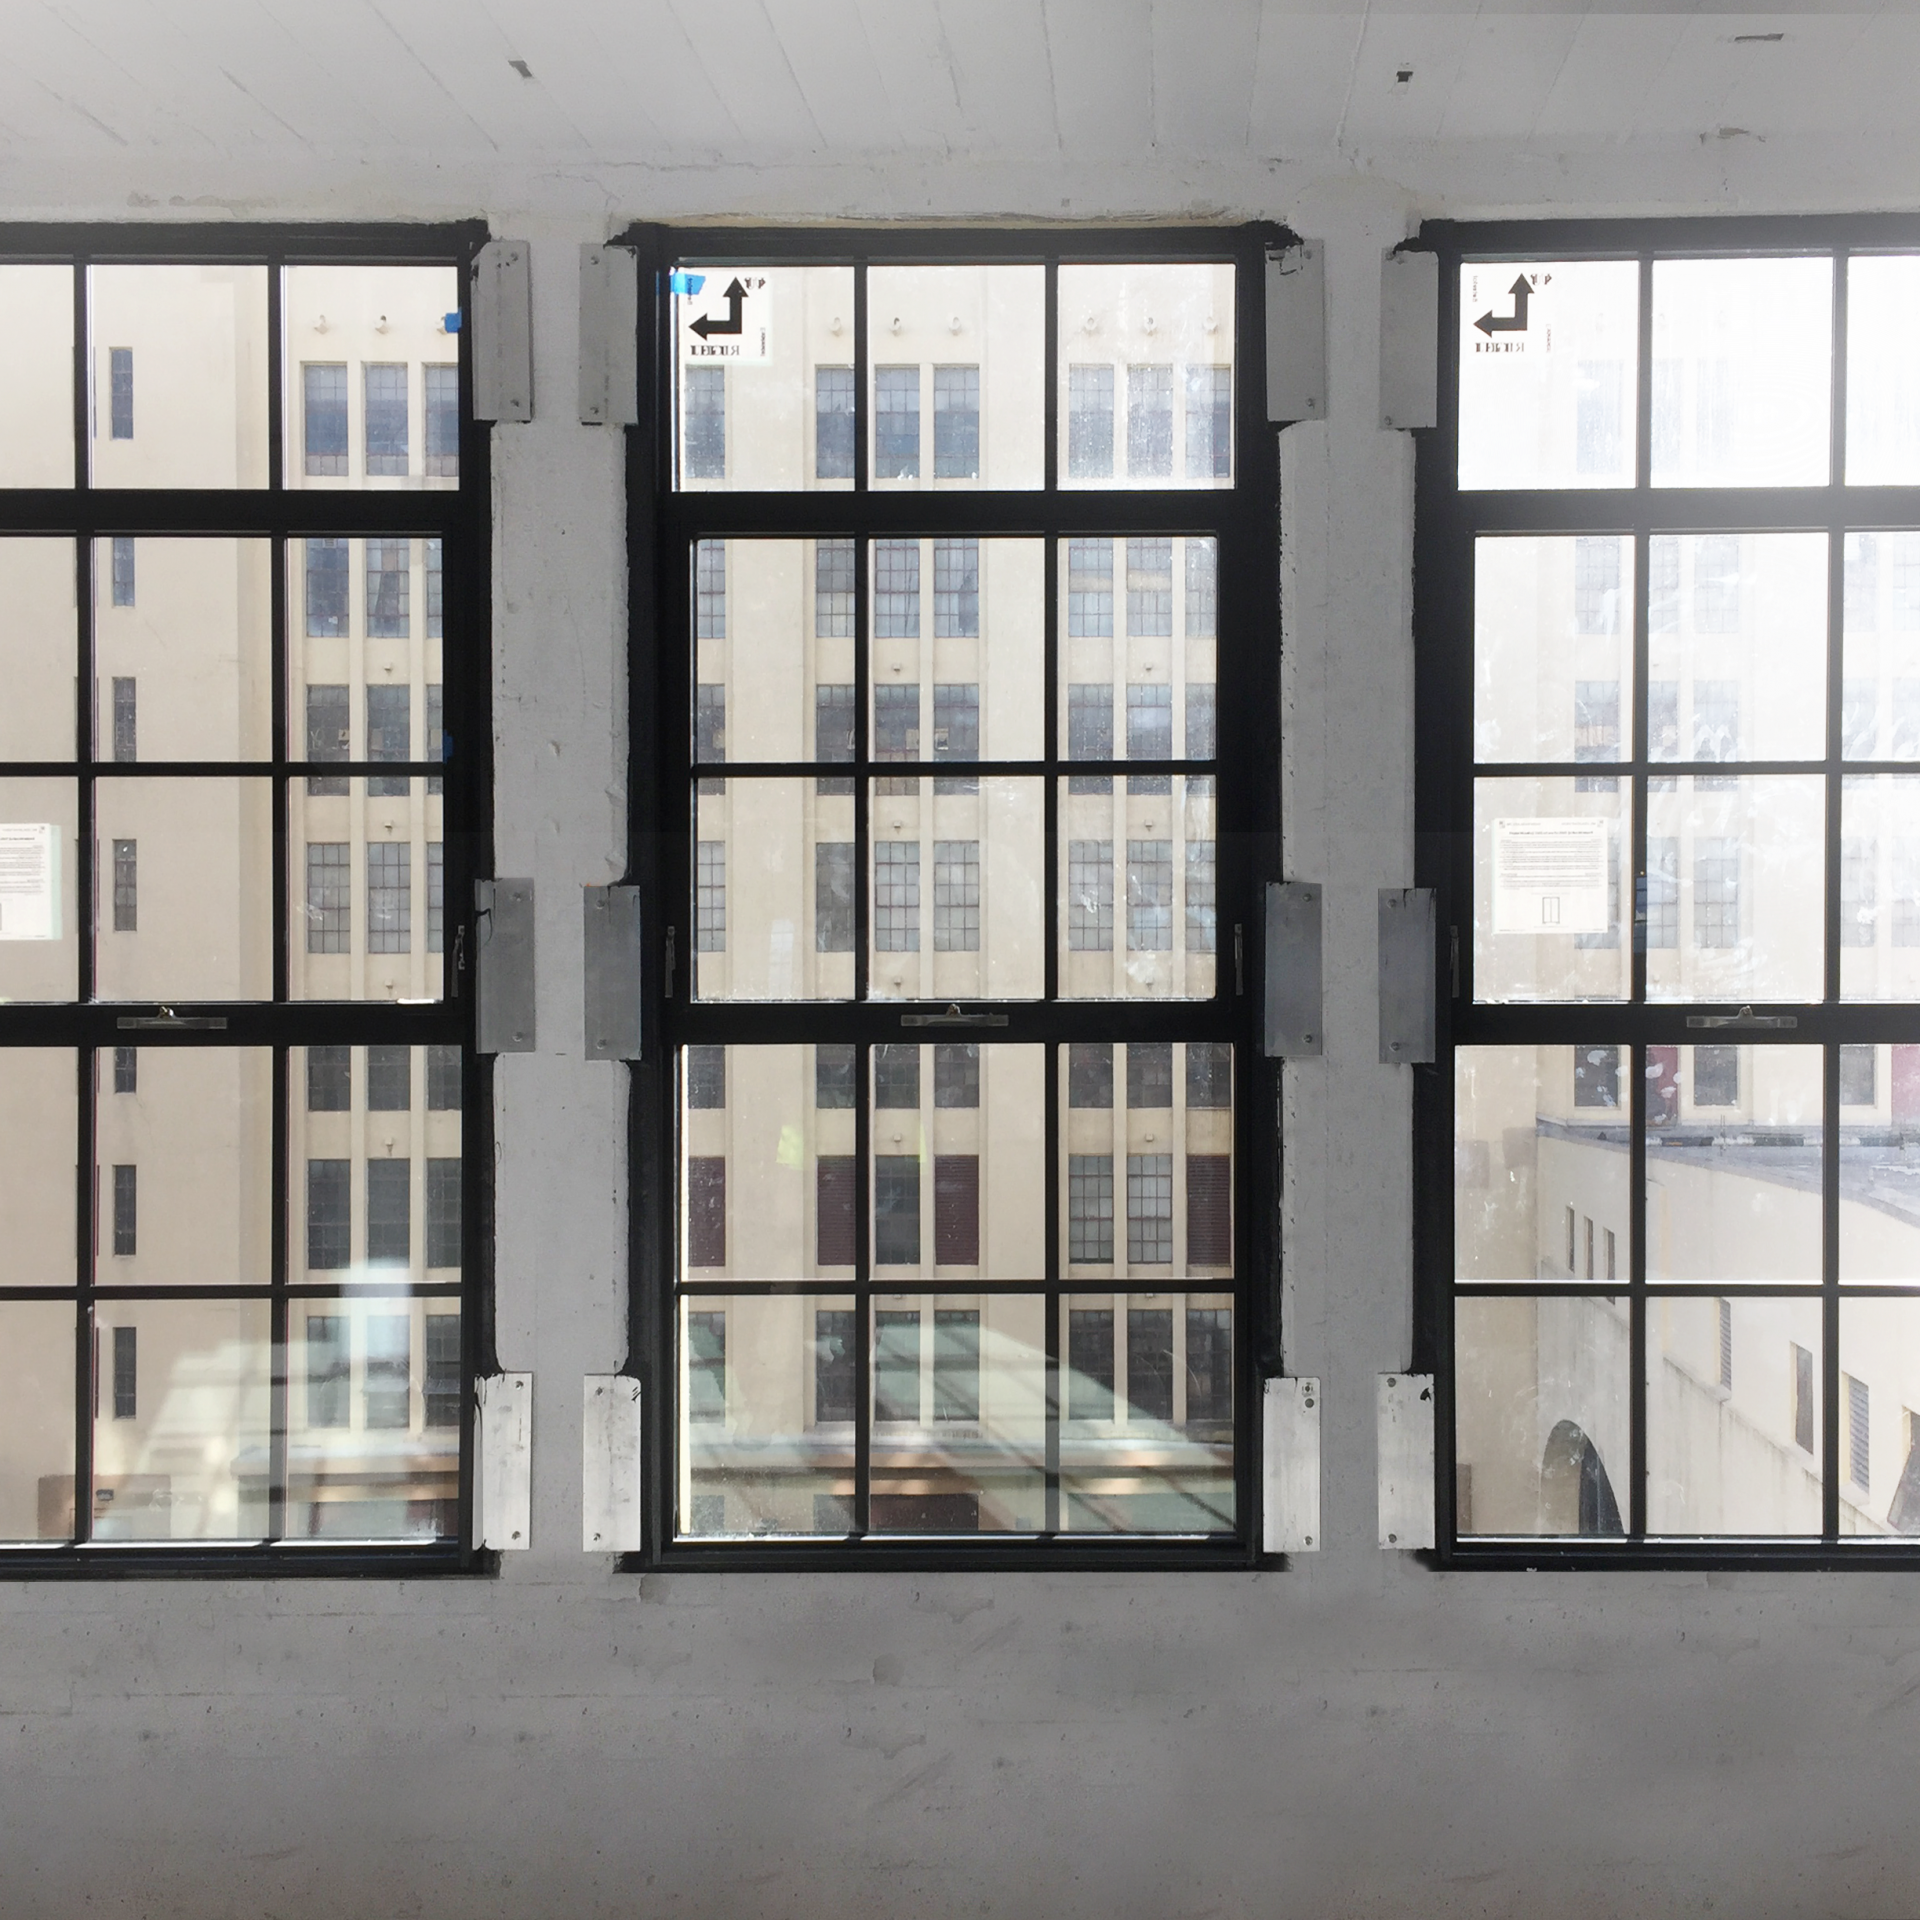 New interior window frames at Brooklyn Army Terminal